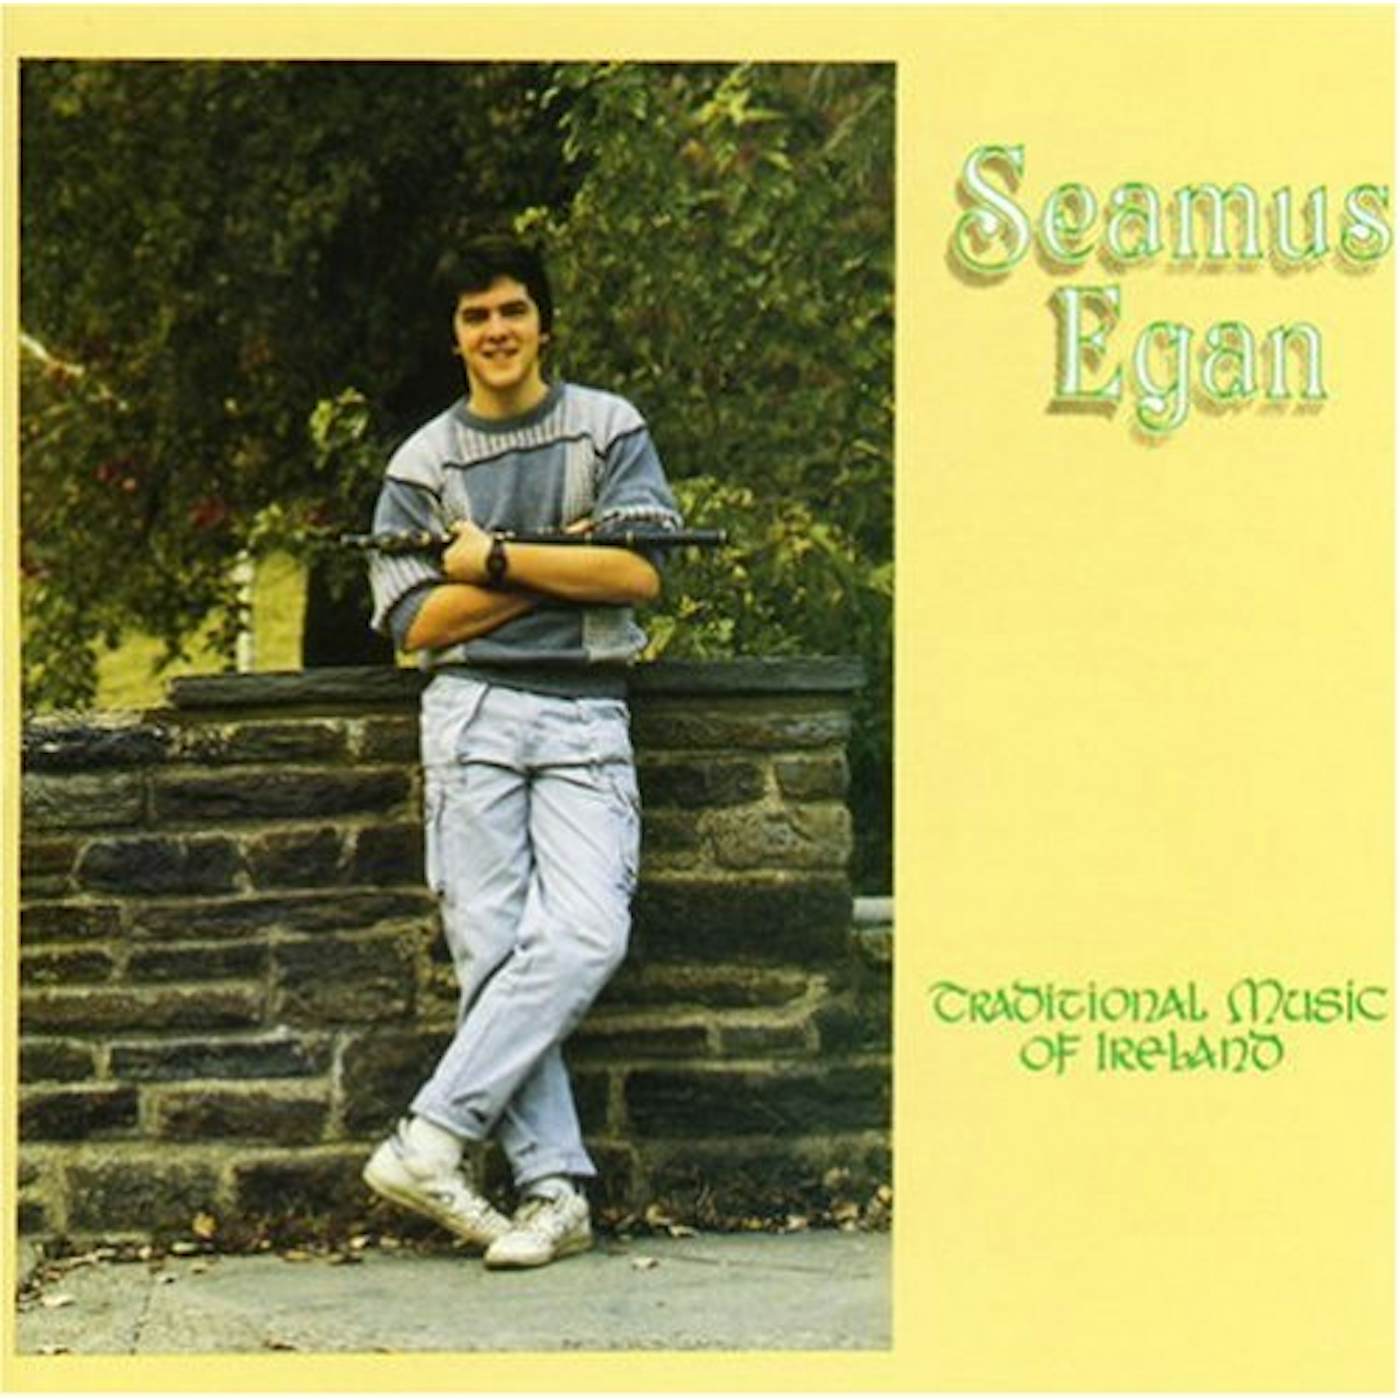 Seamus Egan TRADITIONAL MUSIC OF IRELAND CD